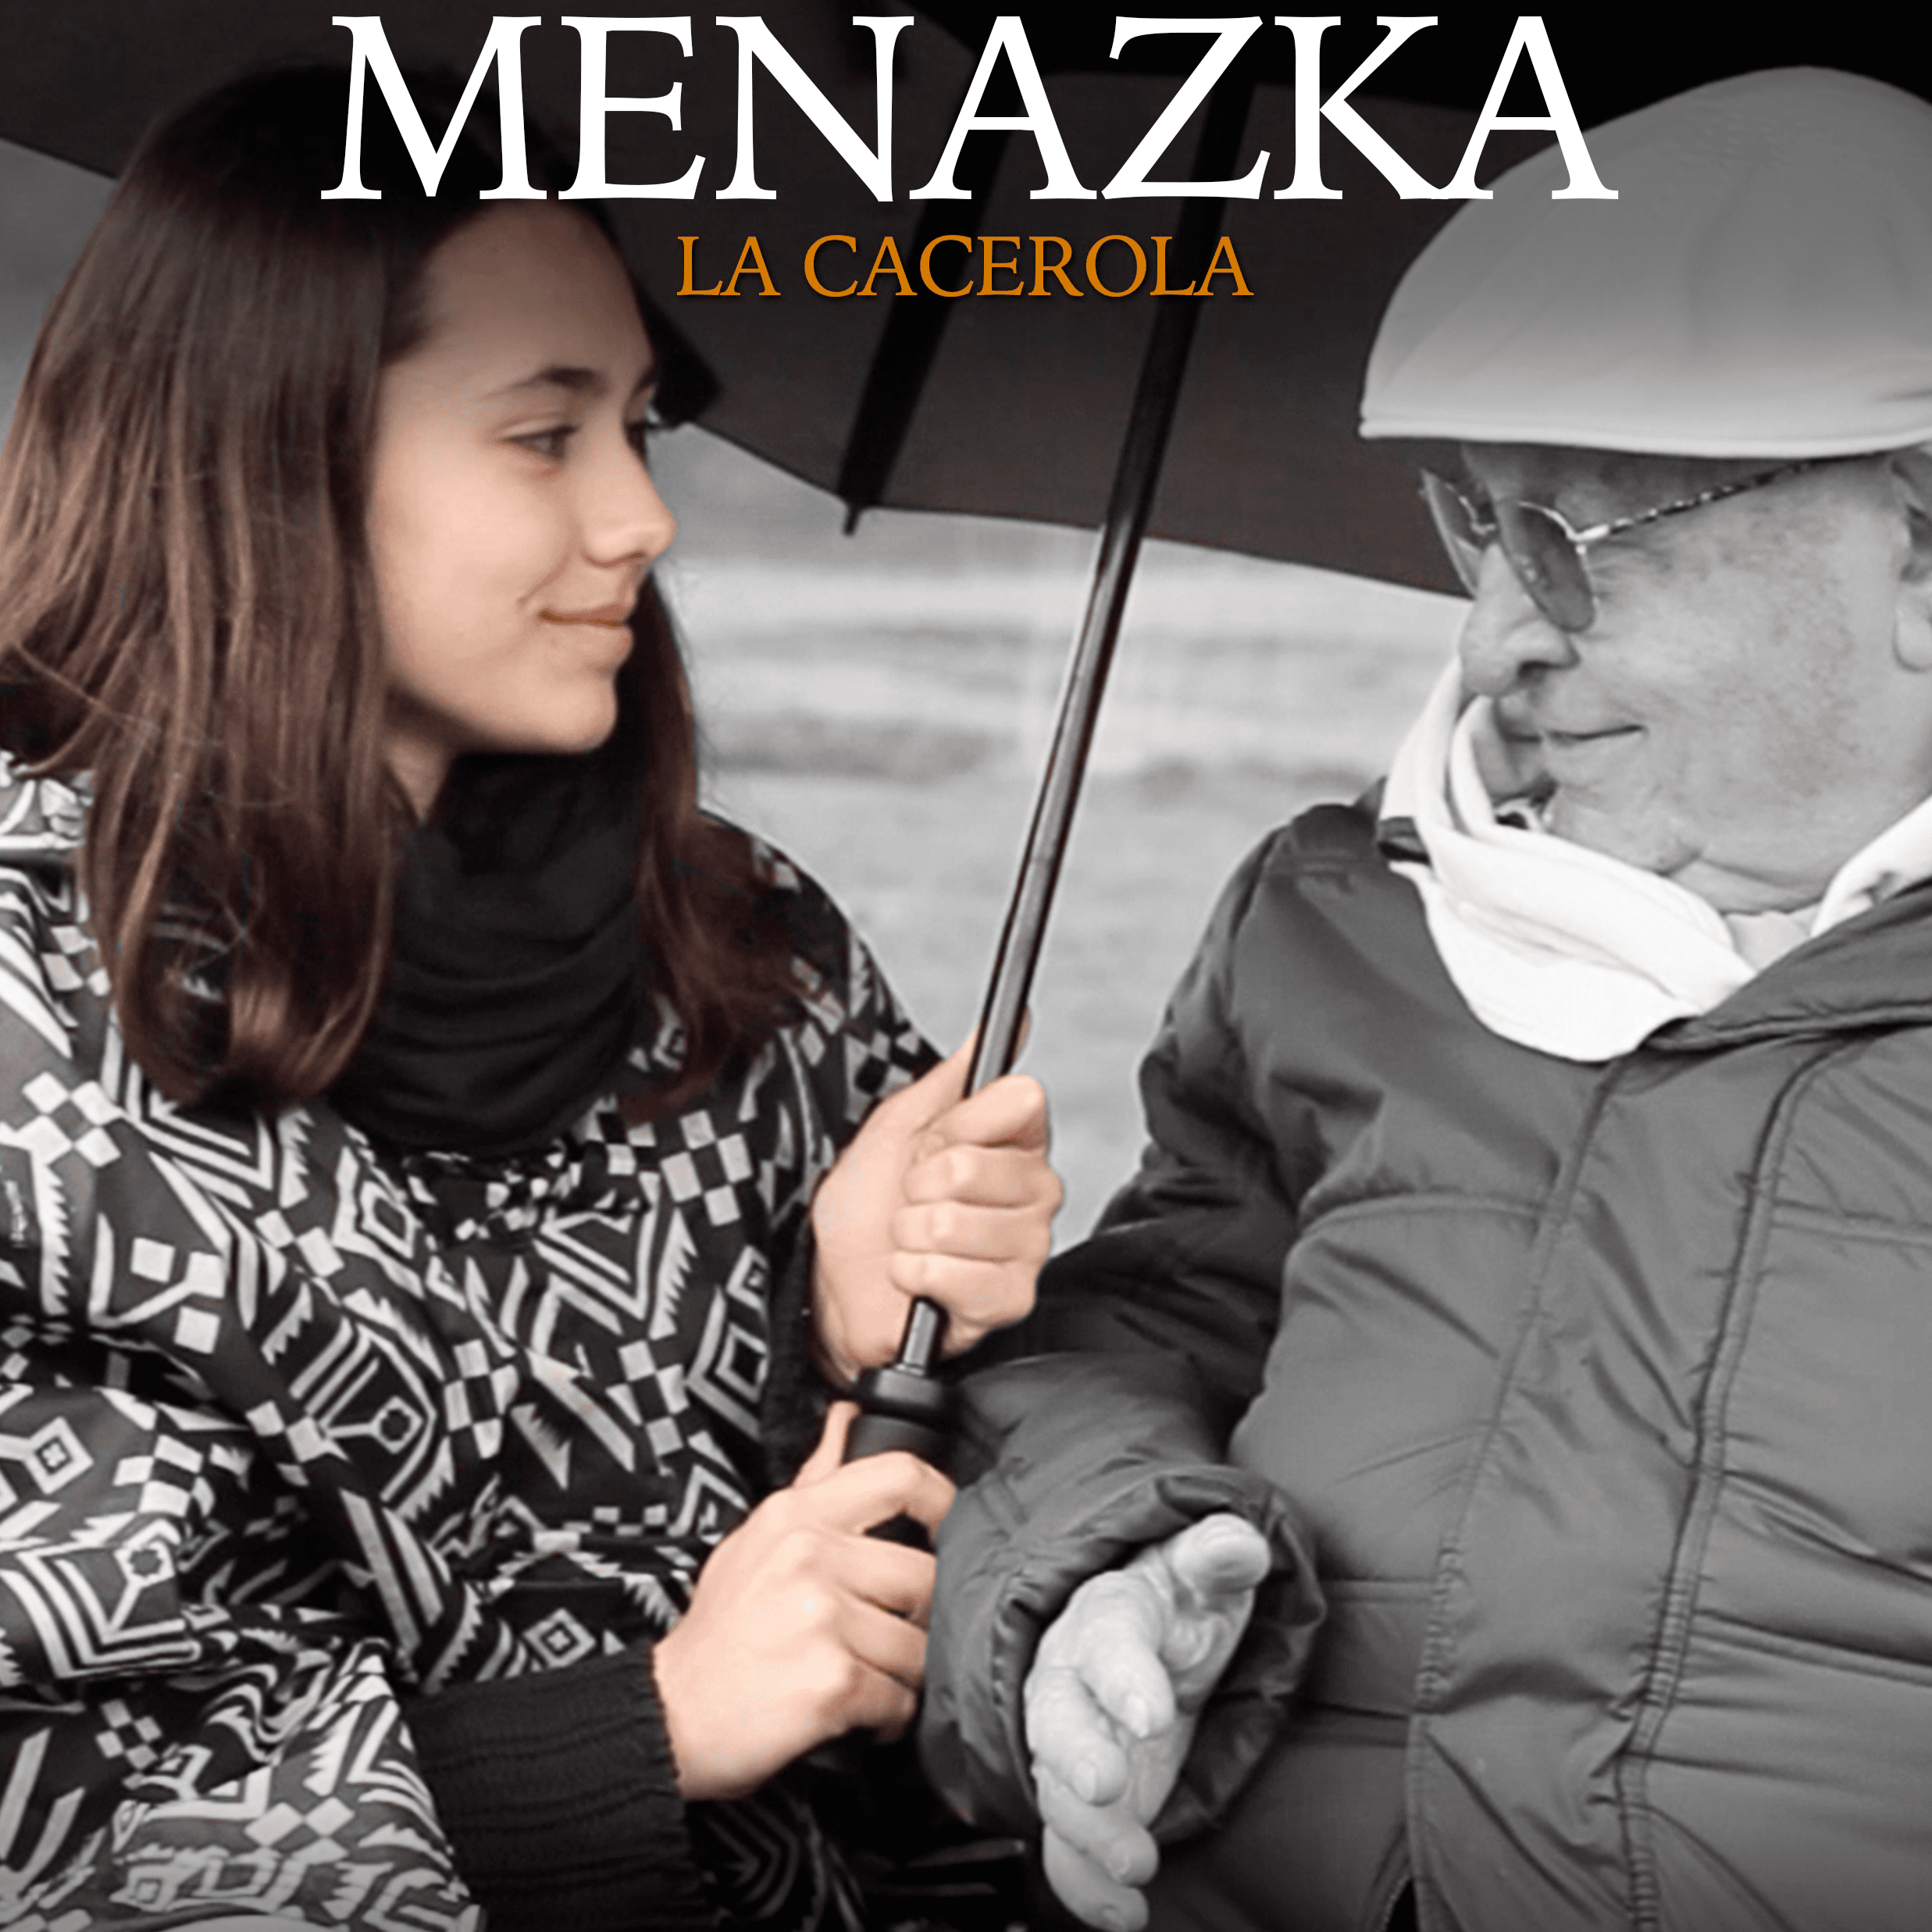 Estreno del documental «Menazka (La Cacerola)» del profesor David Serrano